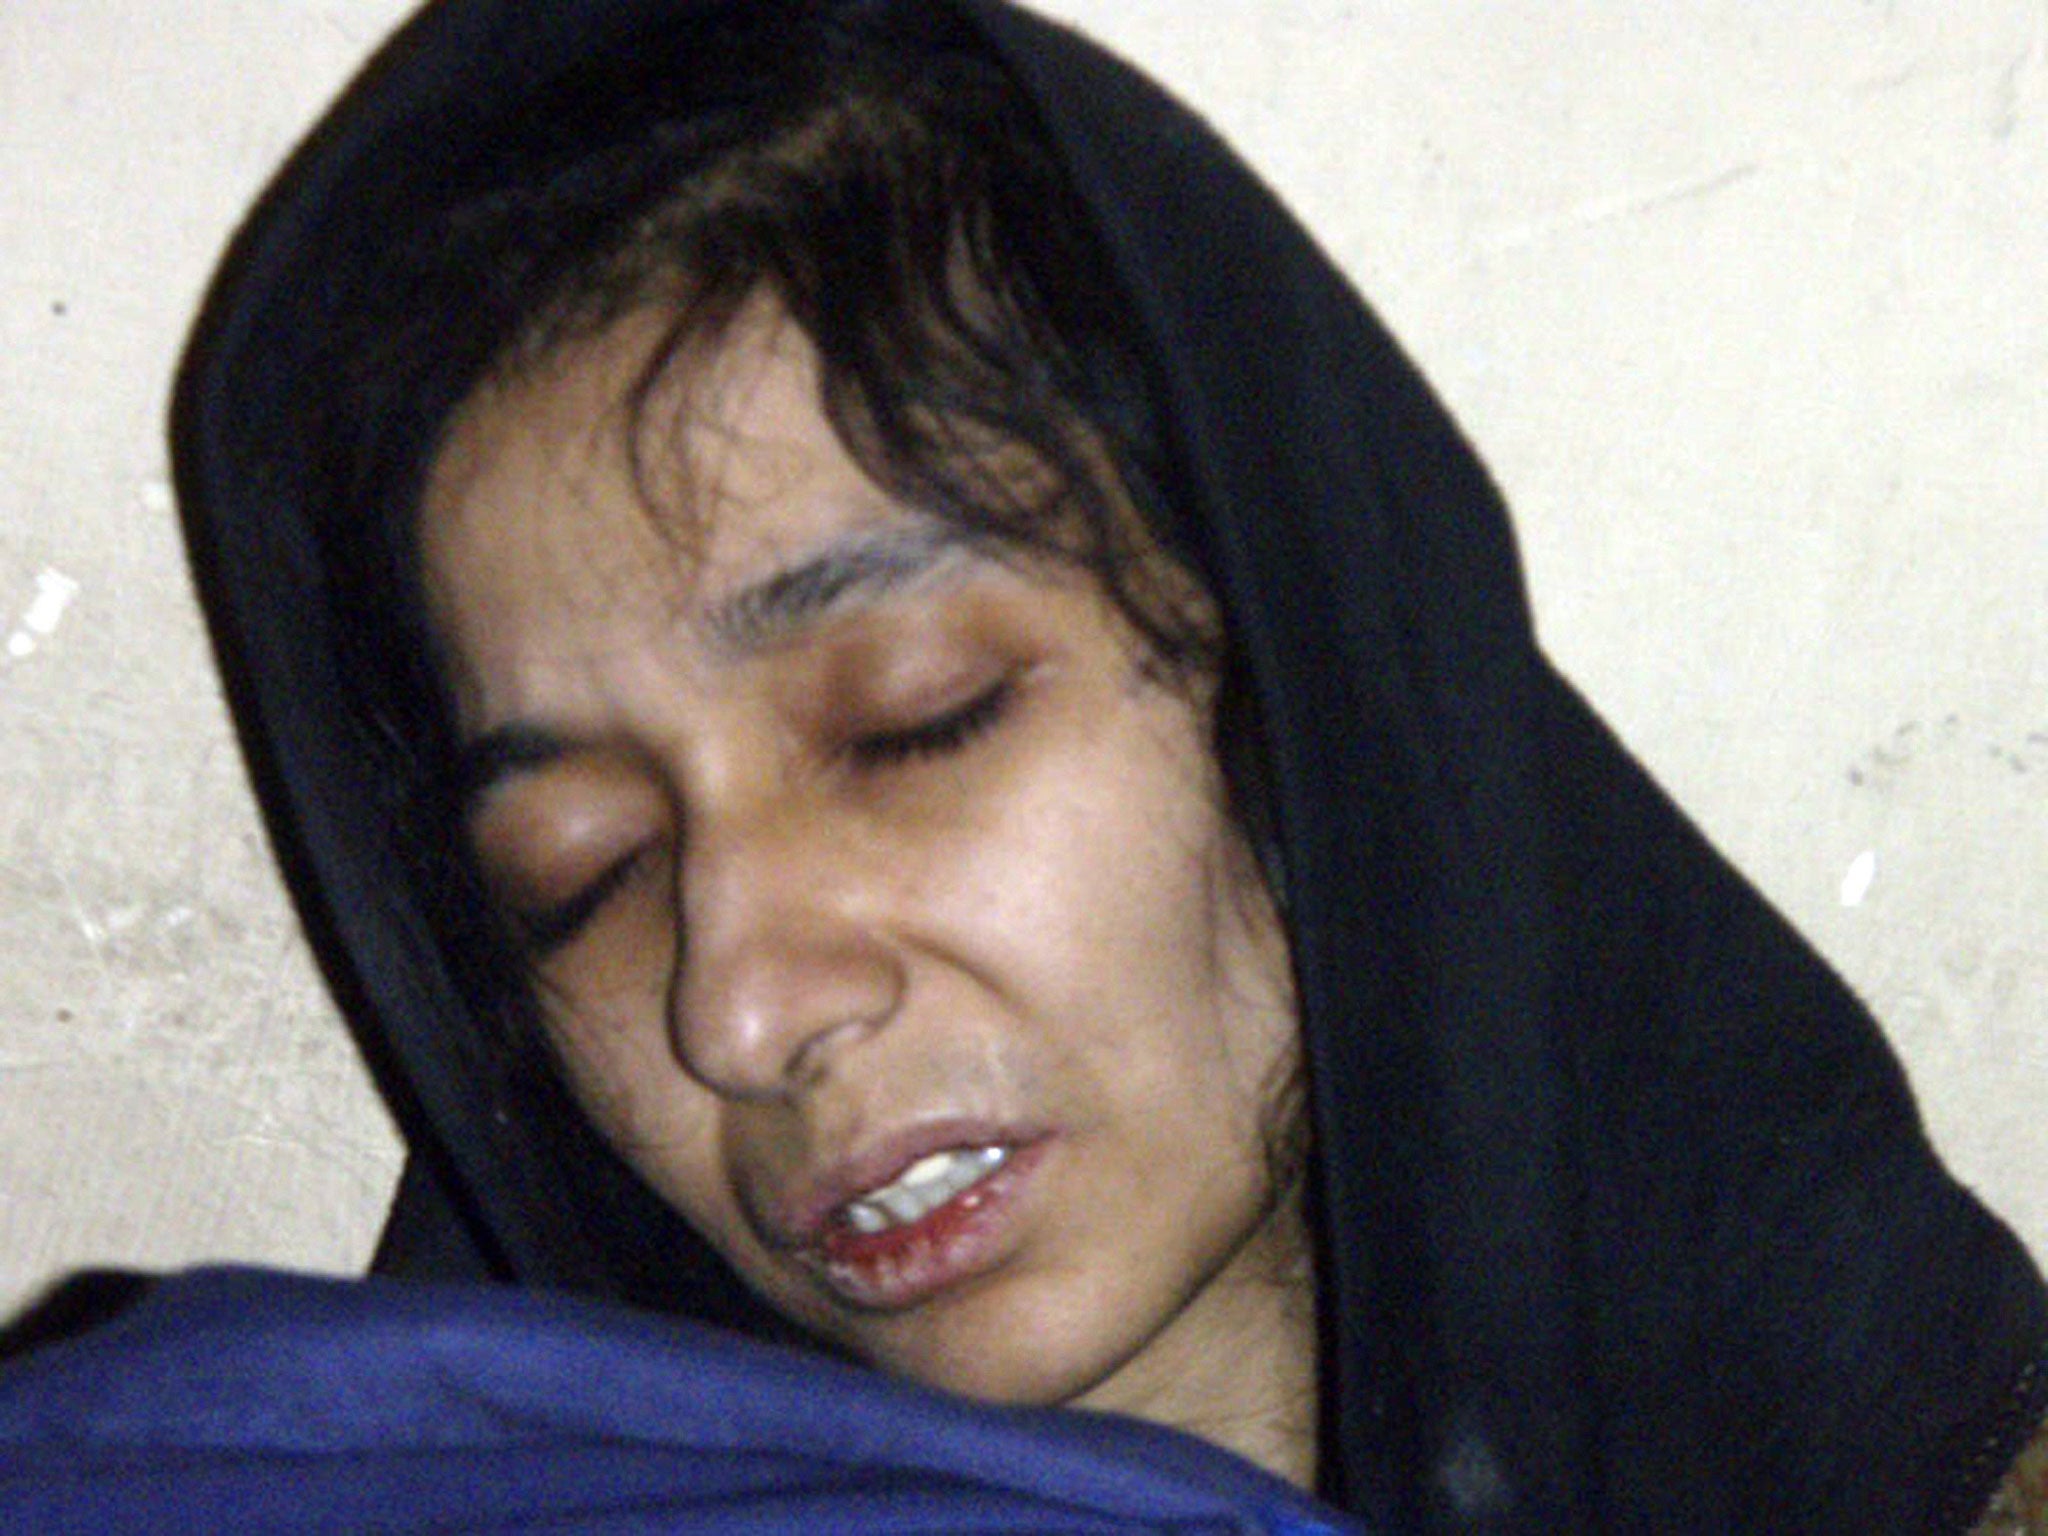 Accused al-Qaeda associate Aafia Siddiqui